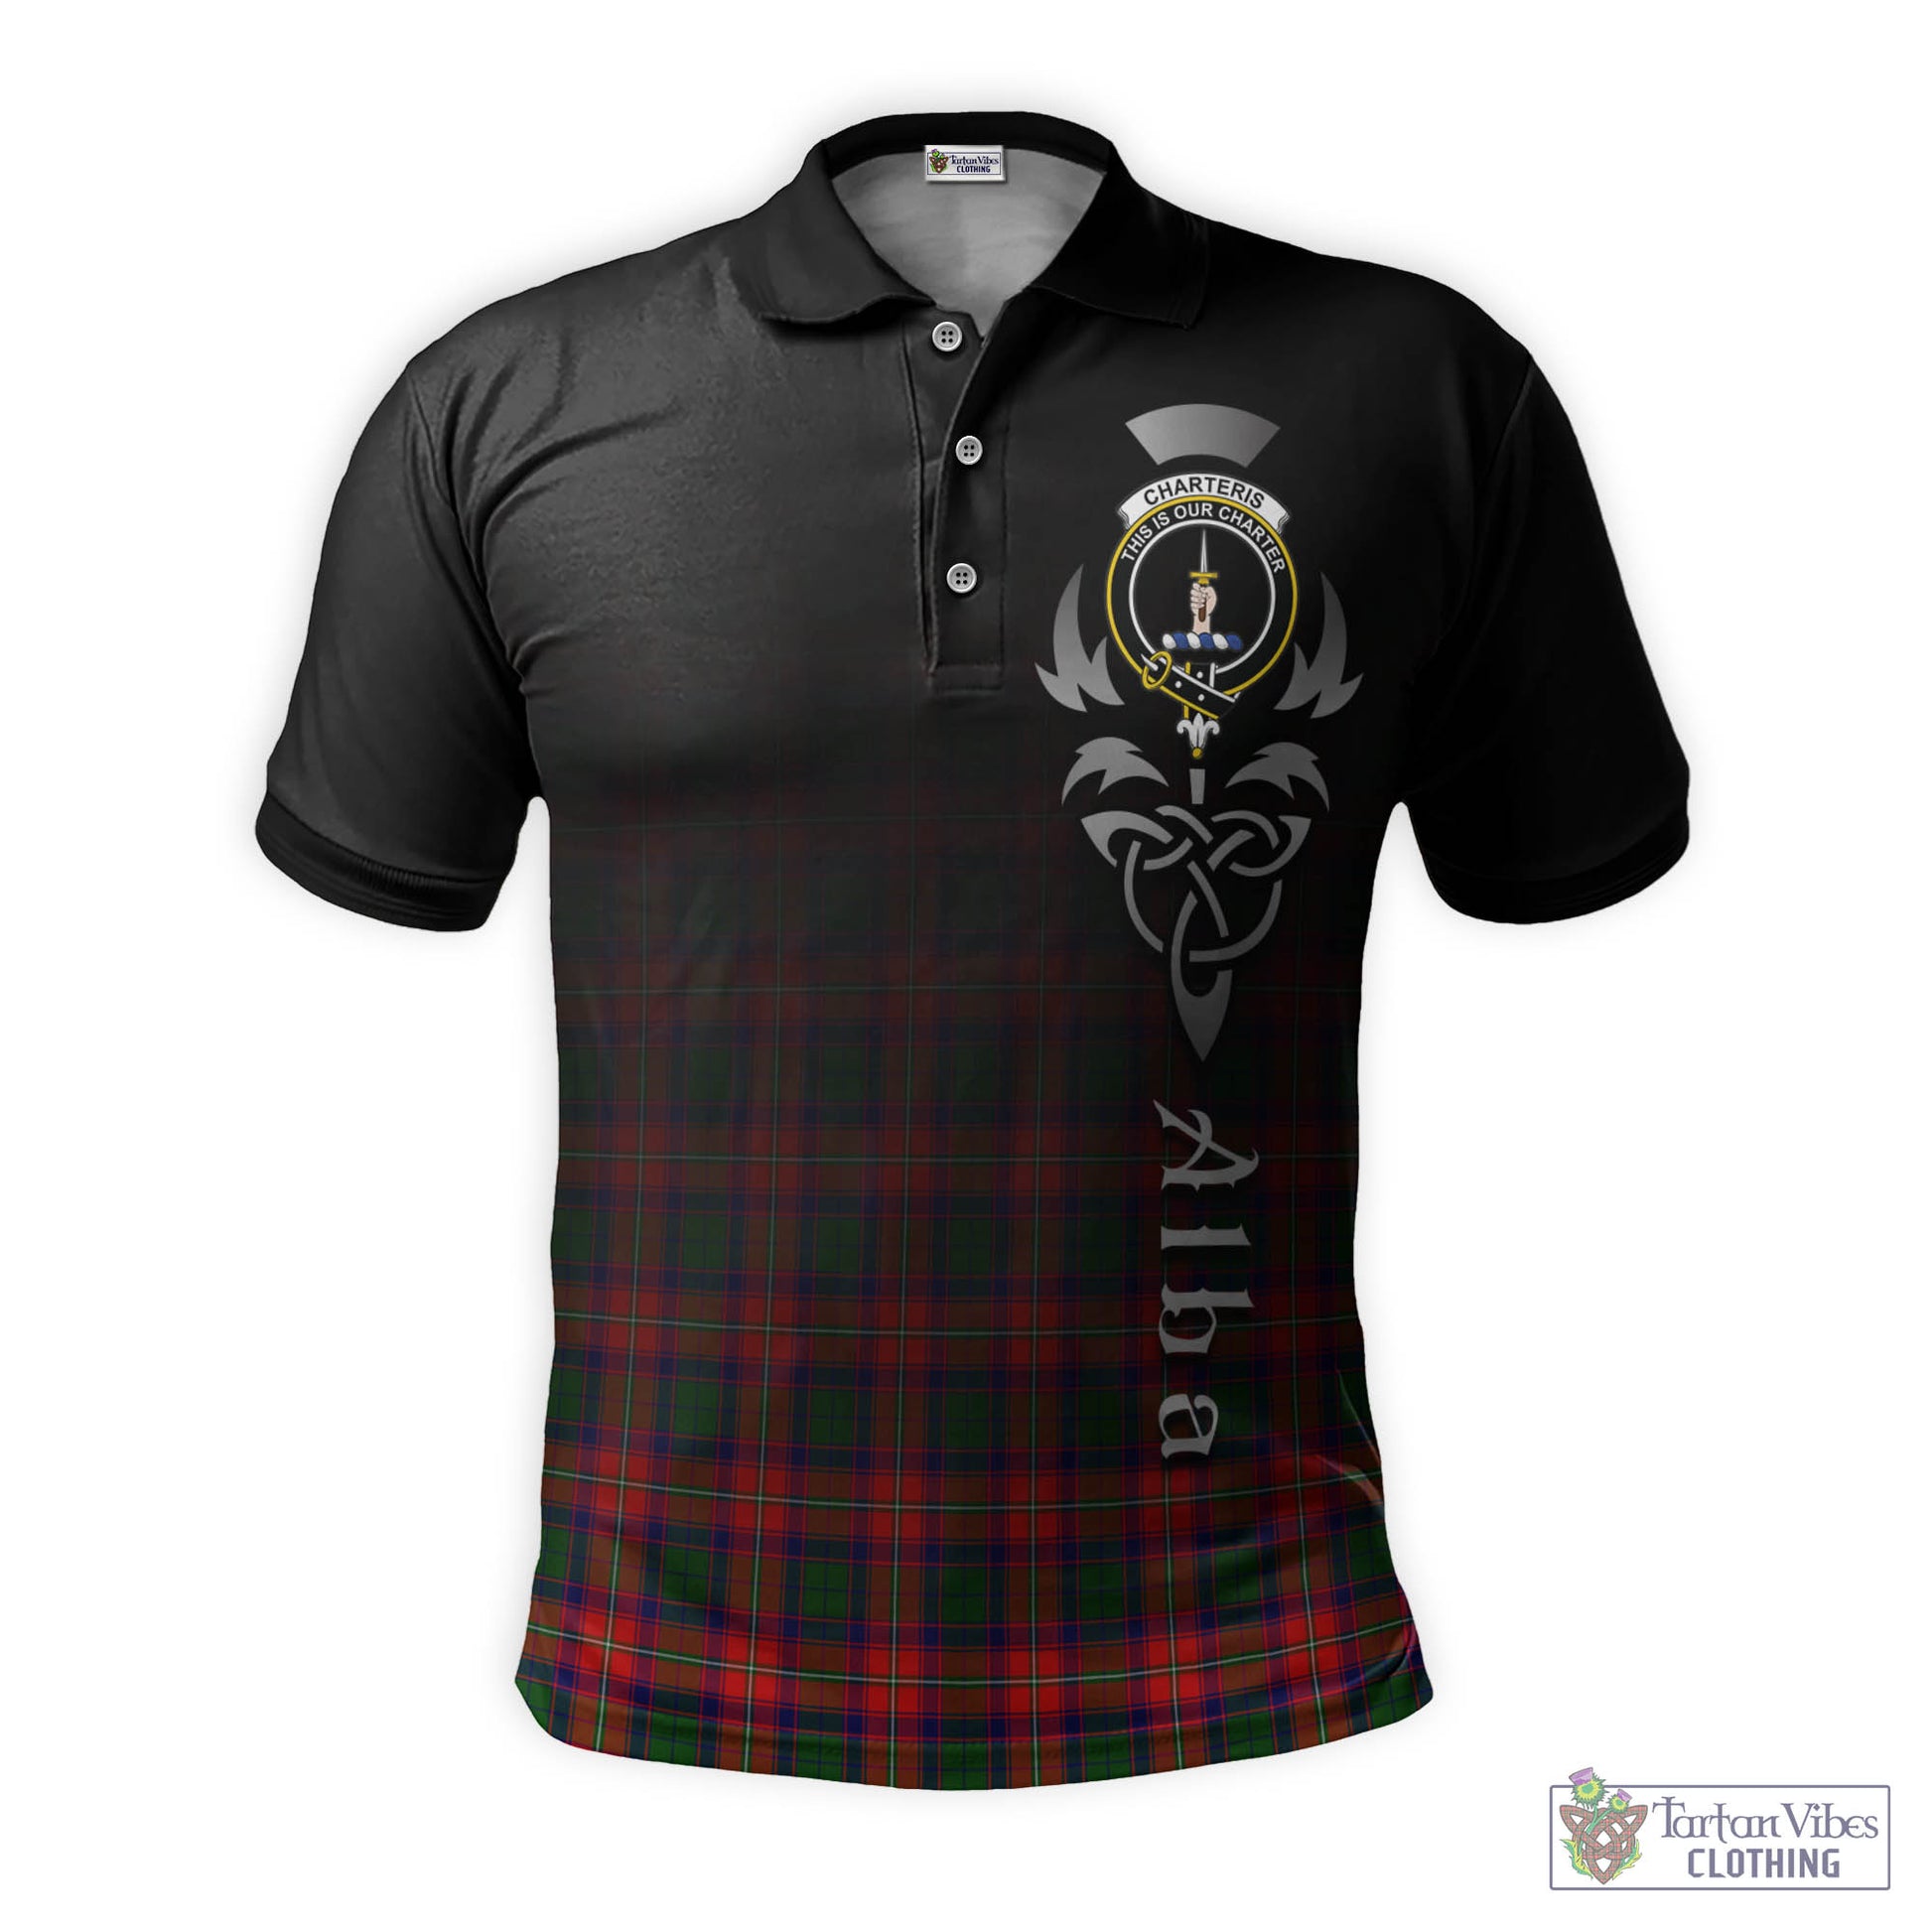 Tartan Vibes Clothing Charteris Tartan Polo Shirt Featuring Alba Gu Brath Family Crest Celtic Inspired